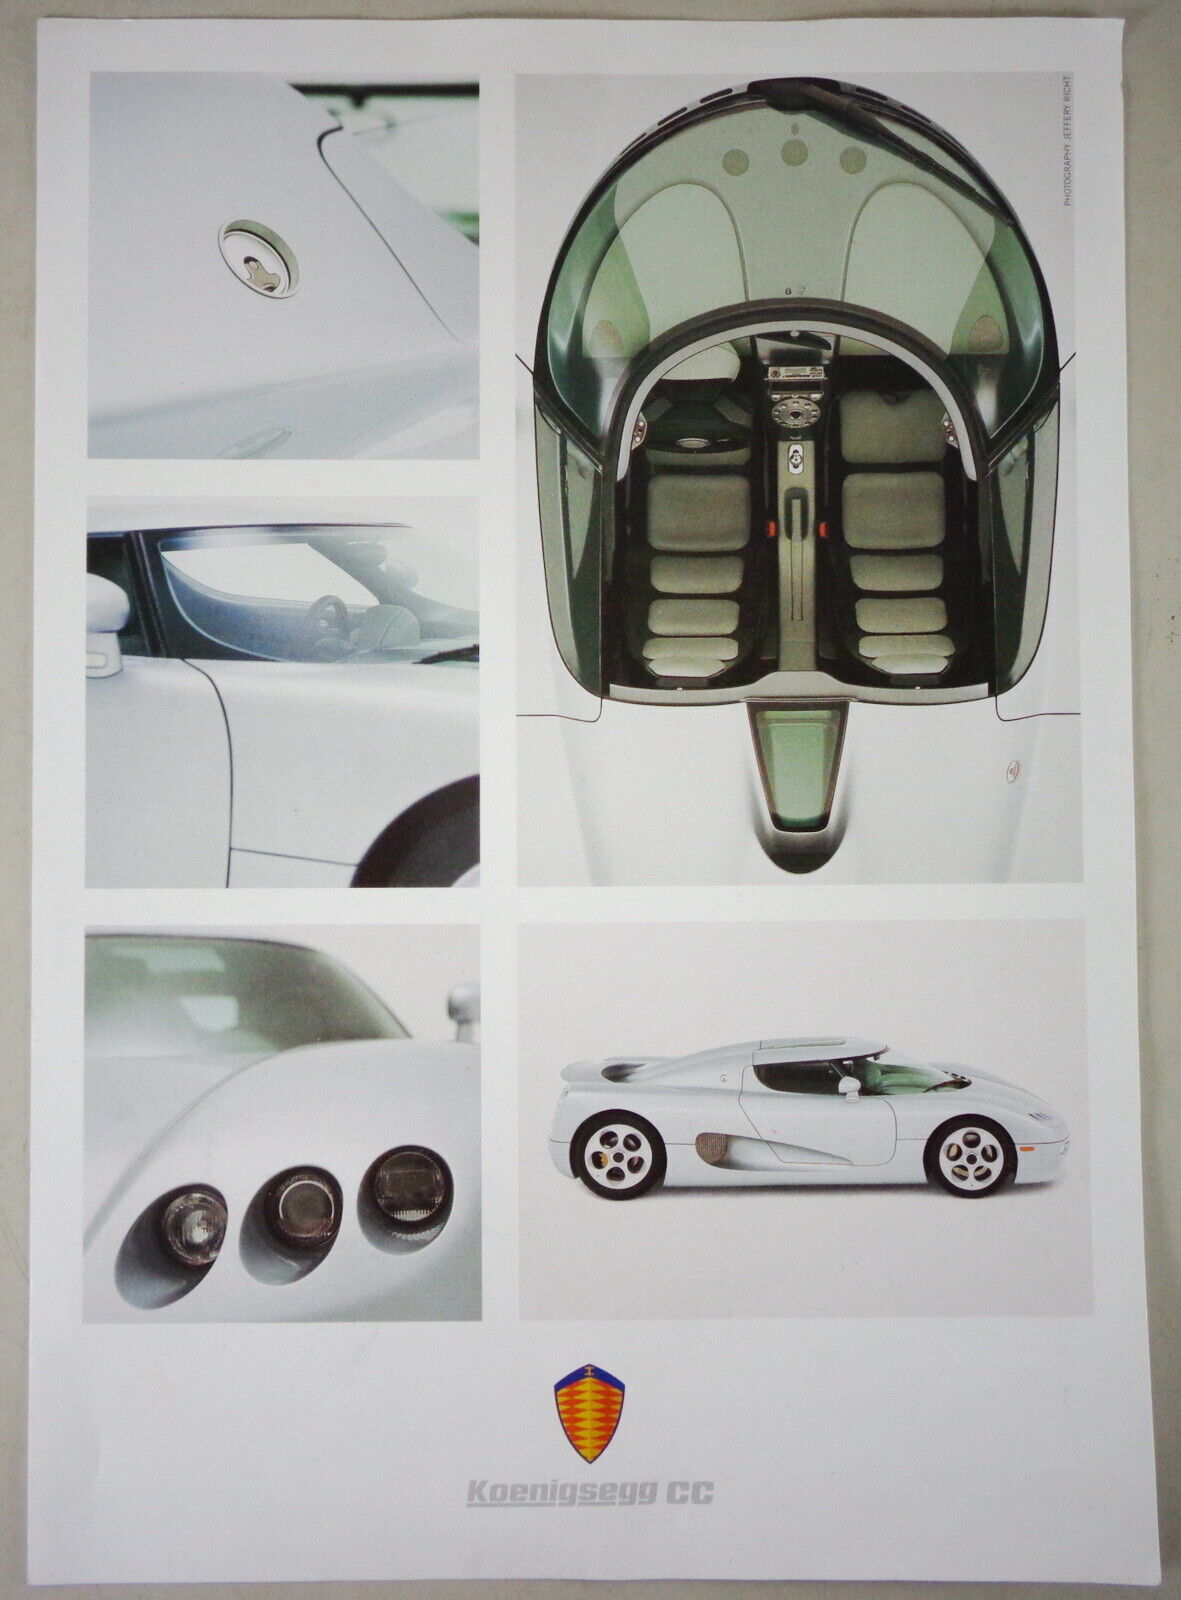 Prospektblatt/Brochure Koenigsegg Cc